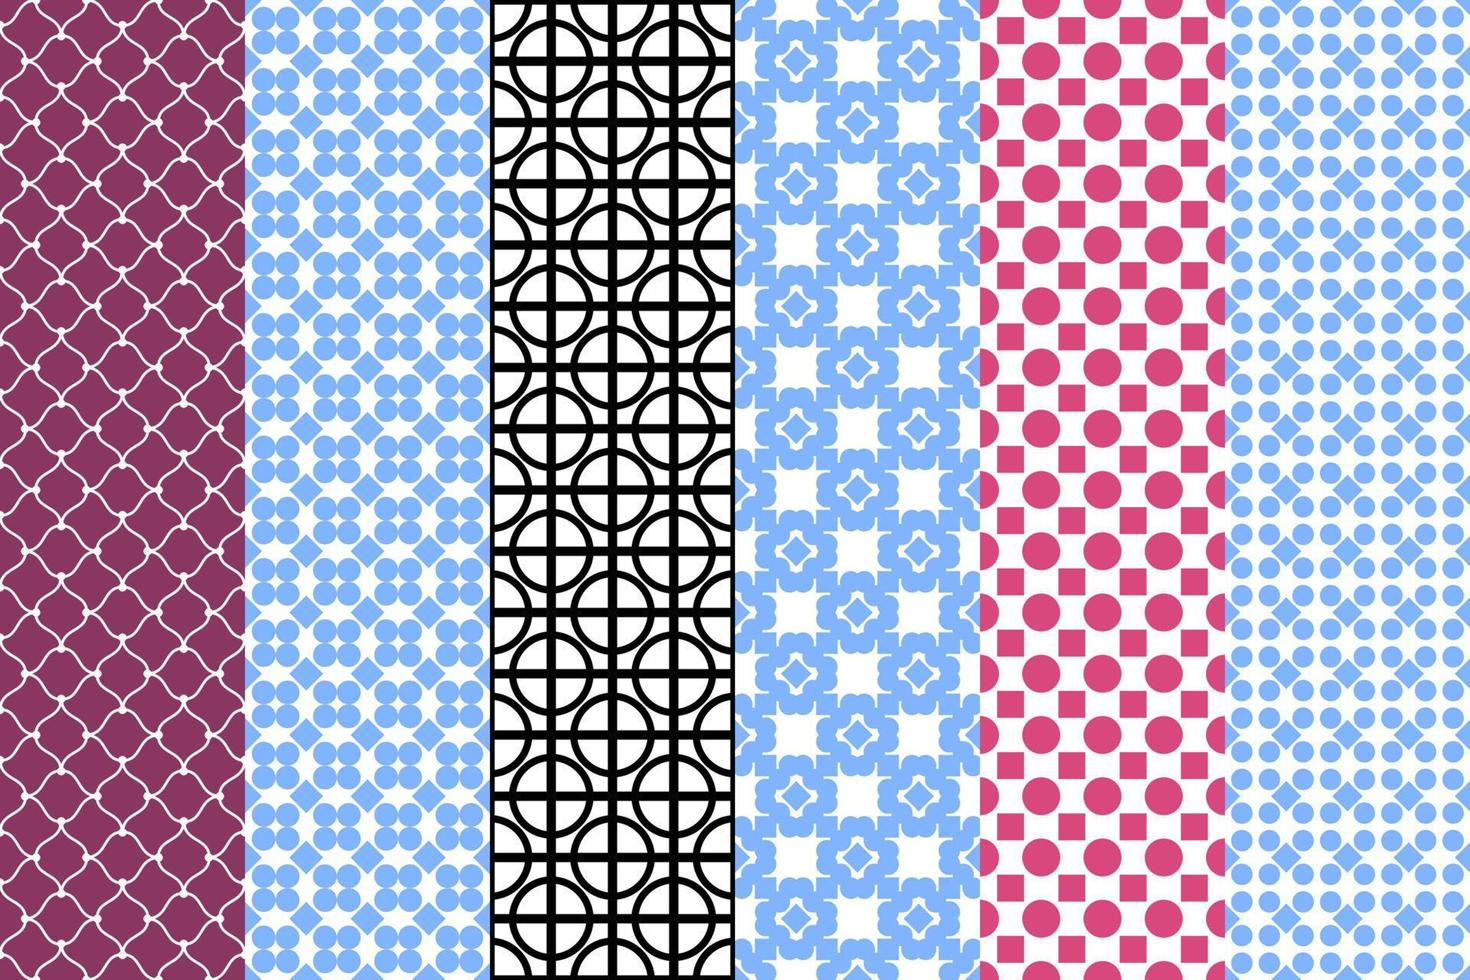 Elegant geometric pattern. Simple texture, design for decoration, fabric, linens, textile, clothing. vector